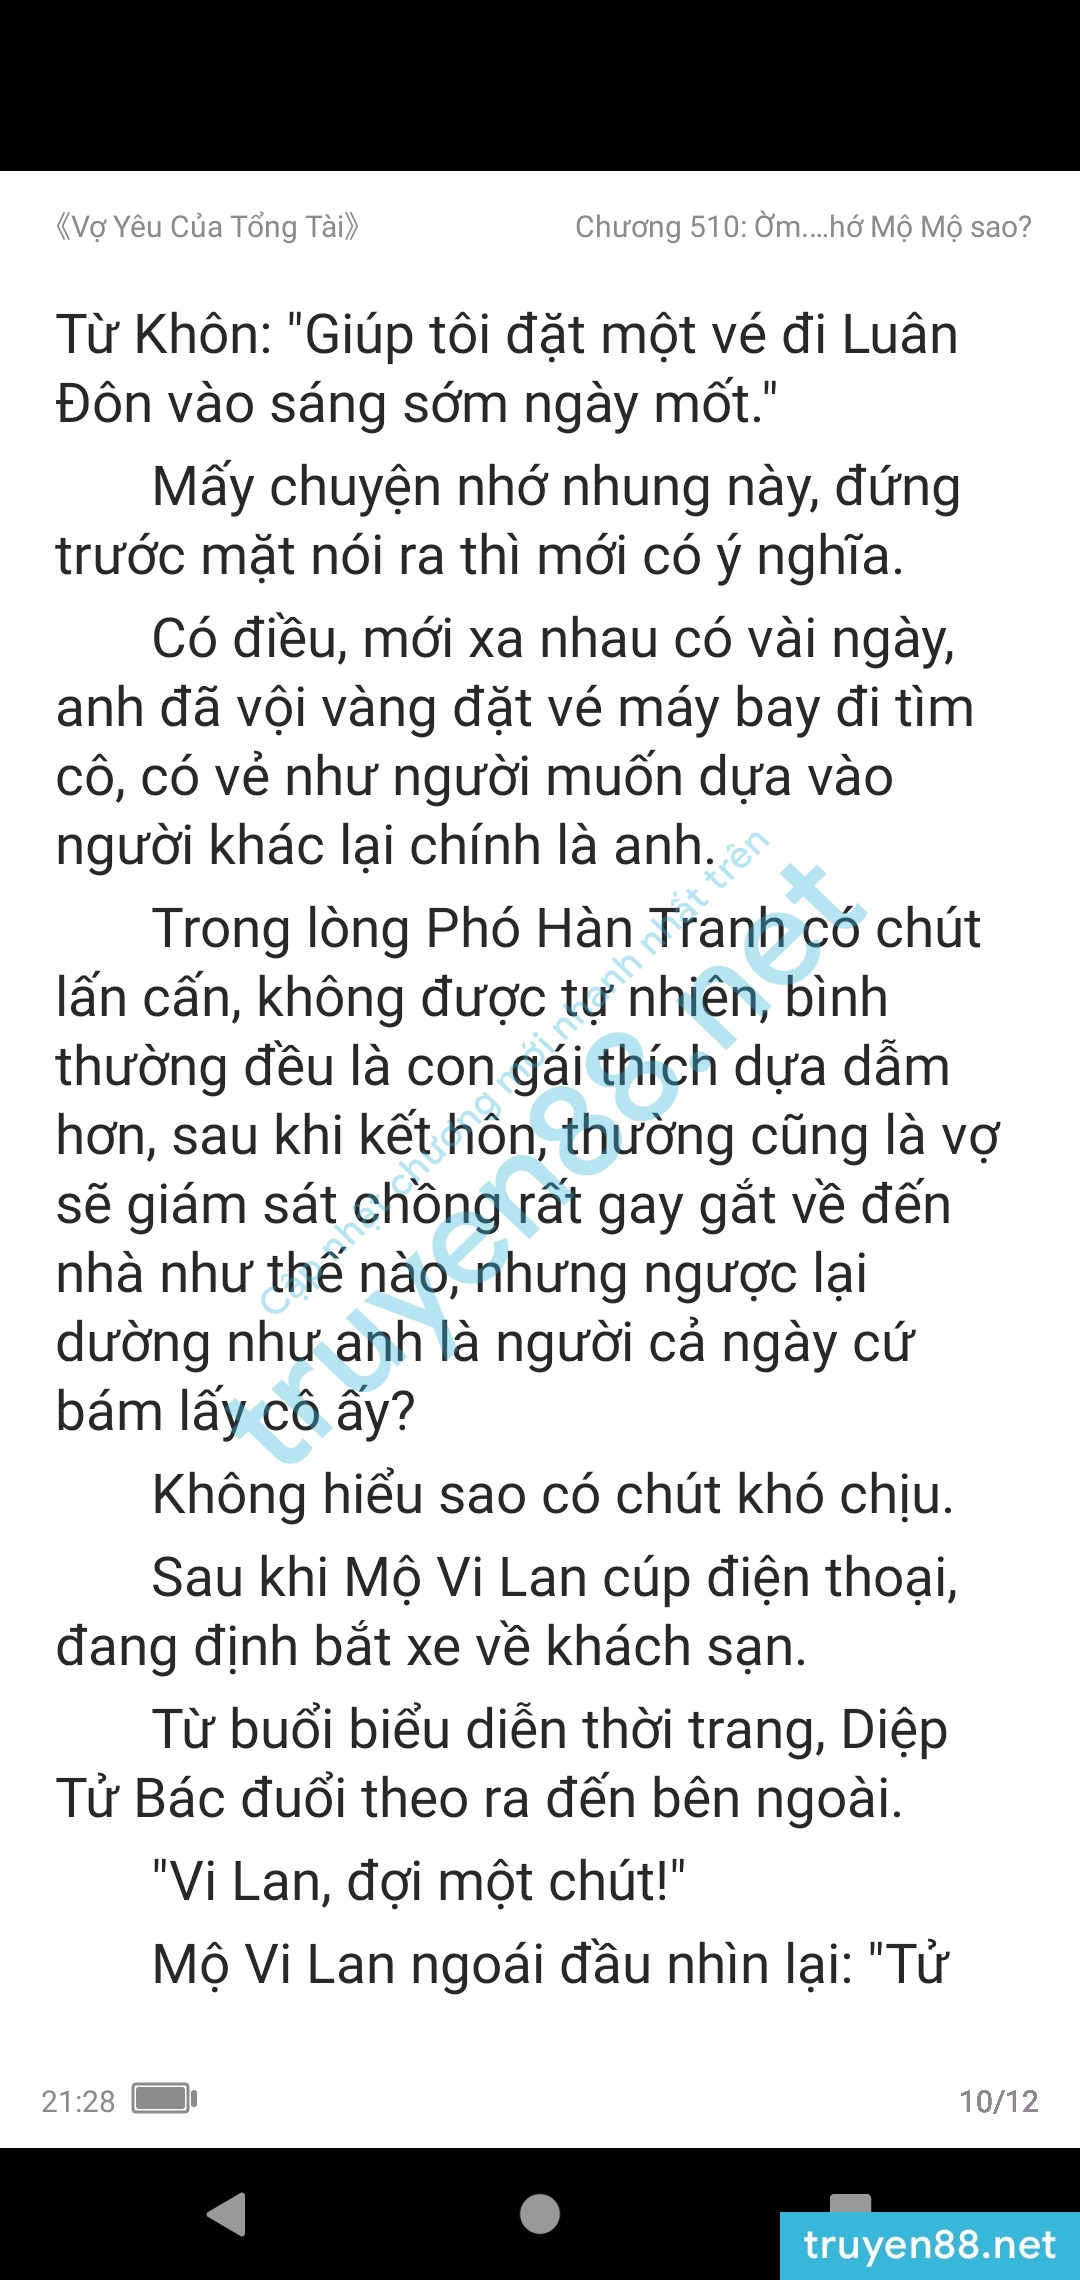 vo-yeu-cua-tong-tai-mo-vi-lan--pho-han-tranh-520-1